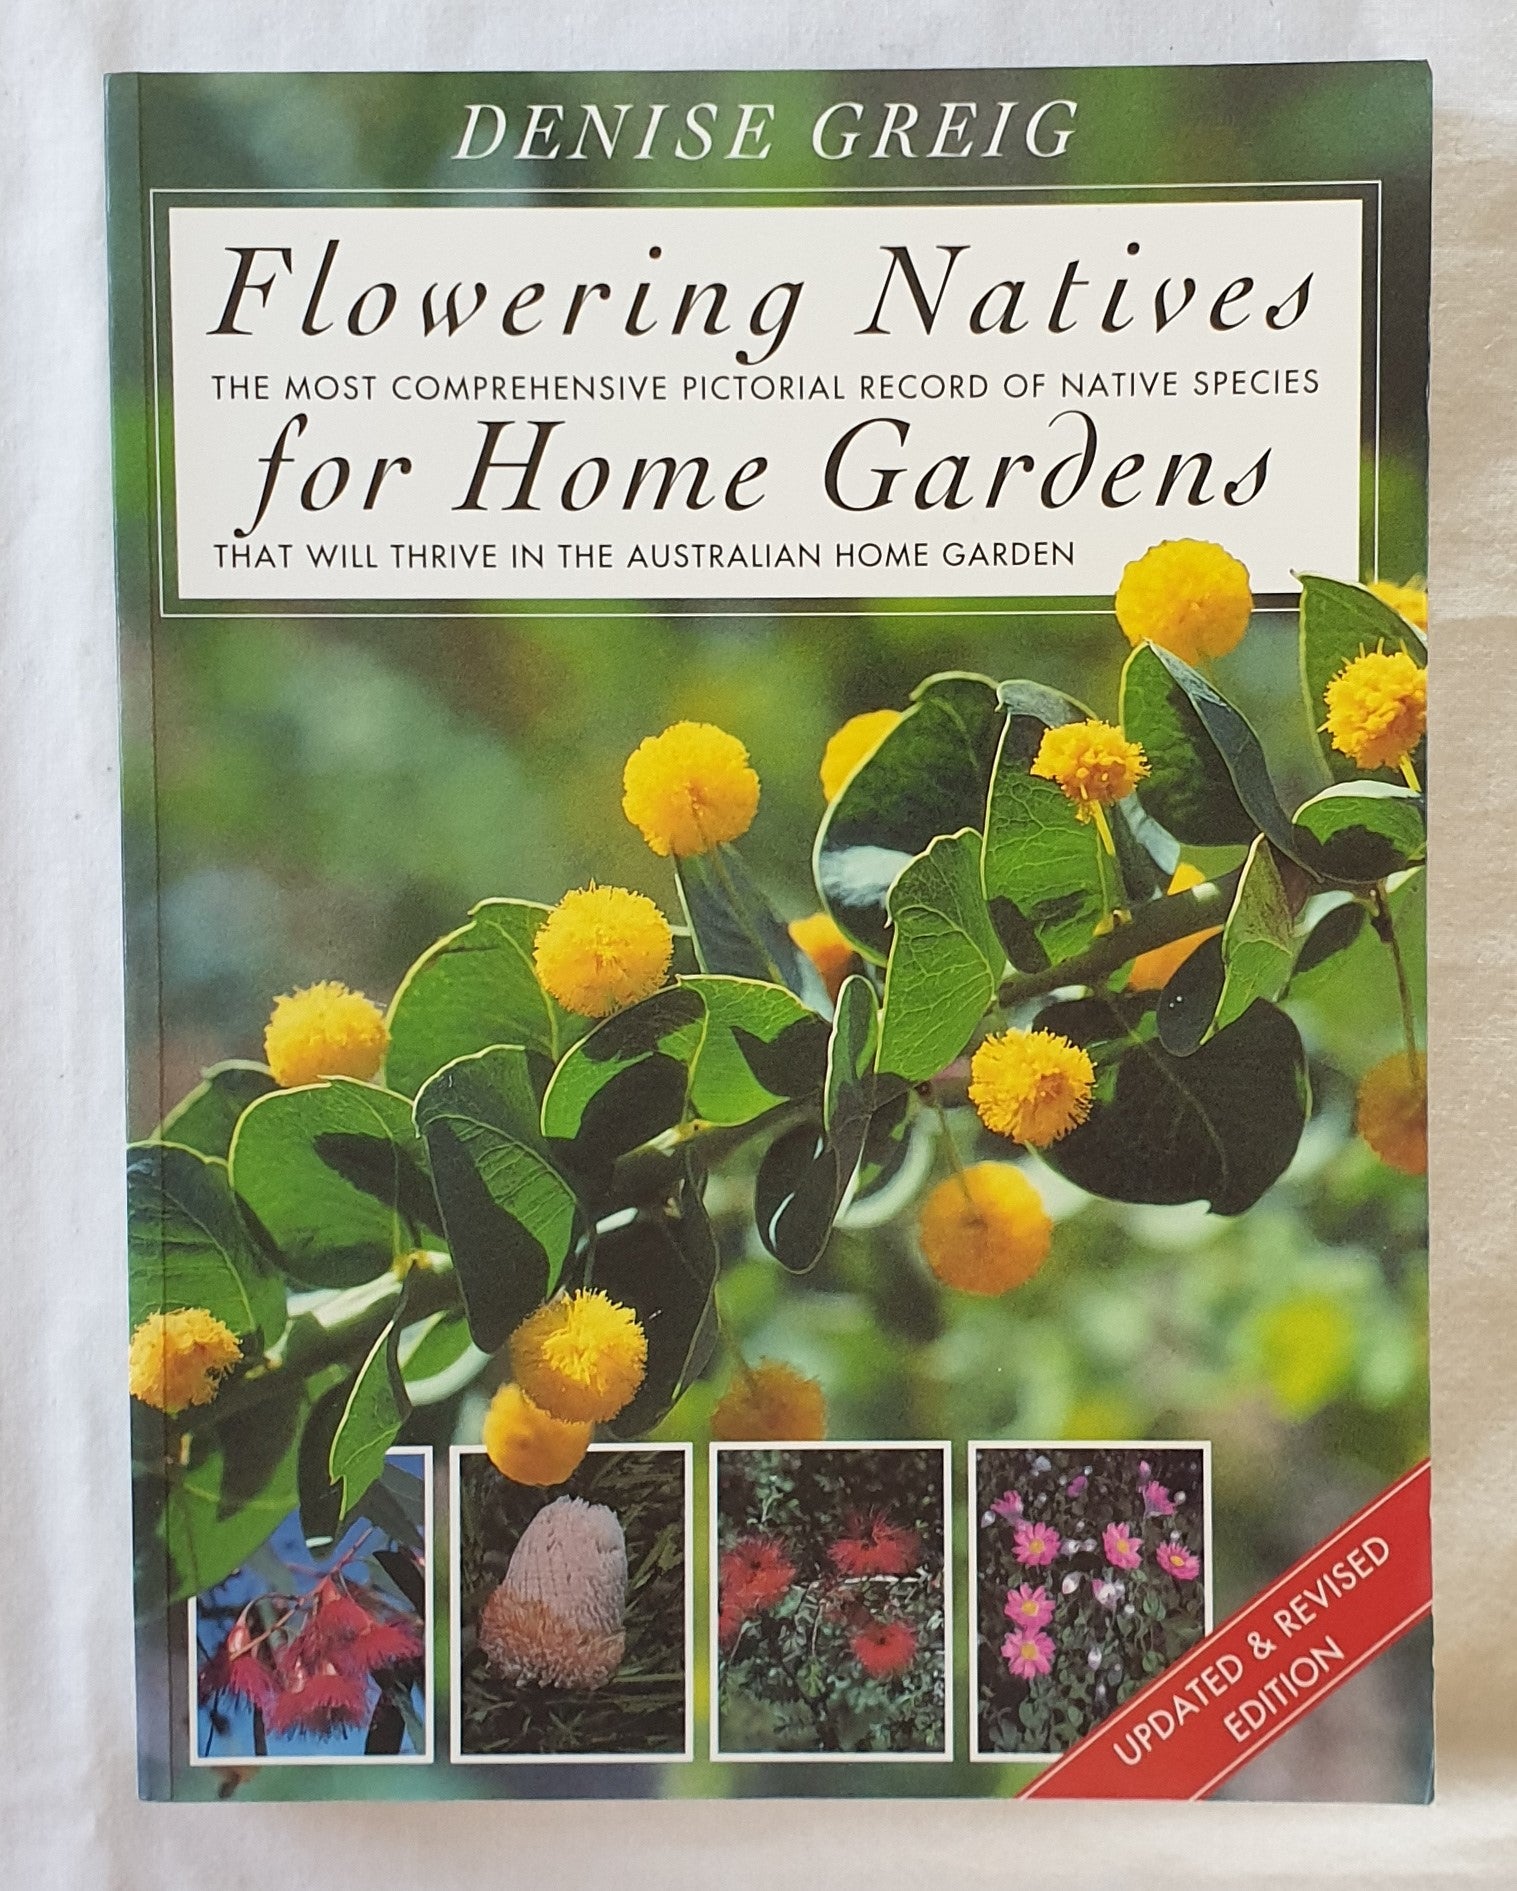 Flowering Natives for Home Gardens by Denise Greig